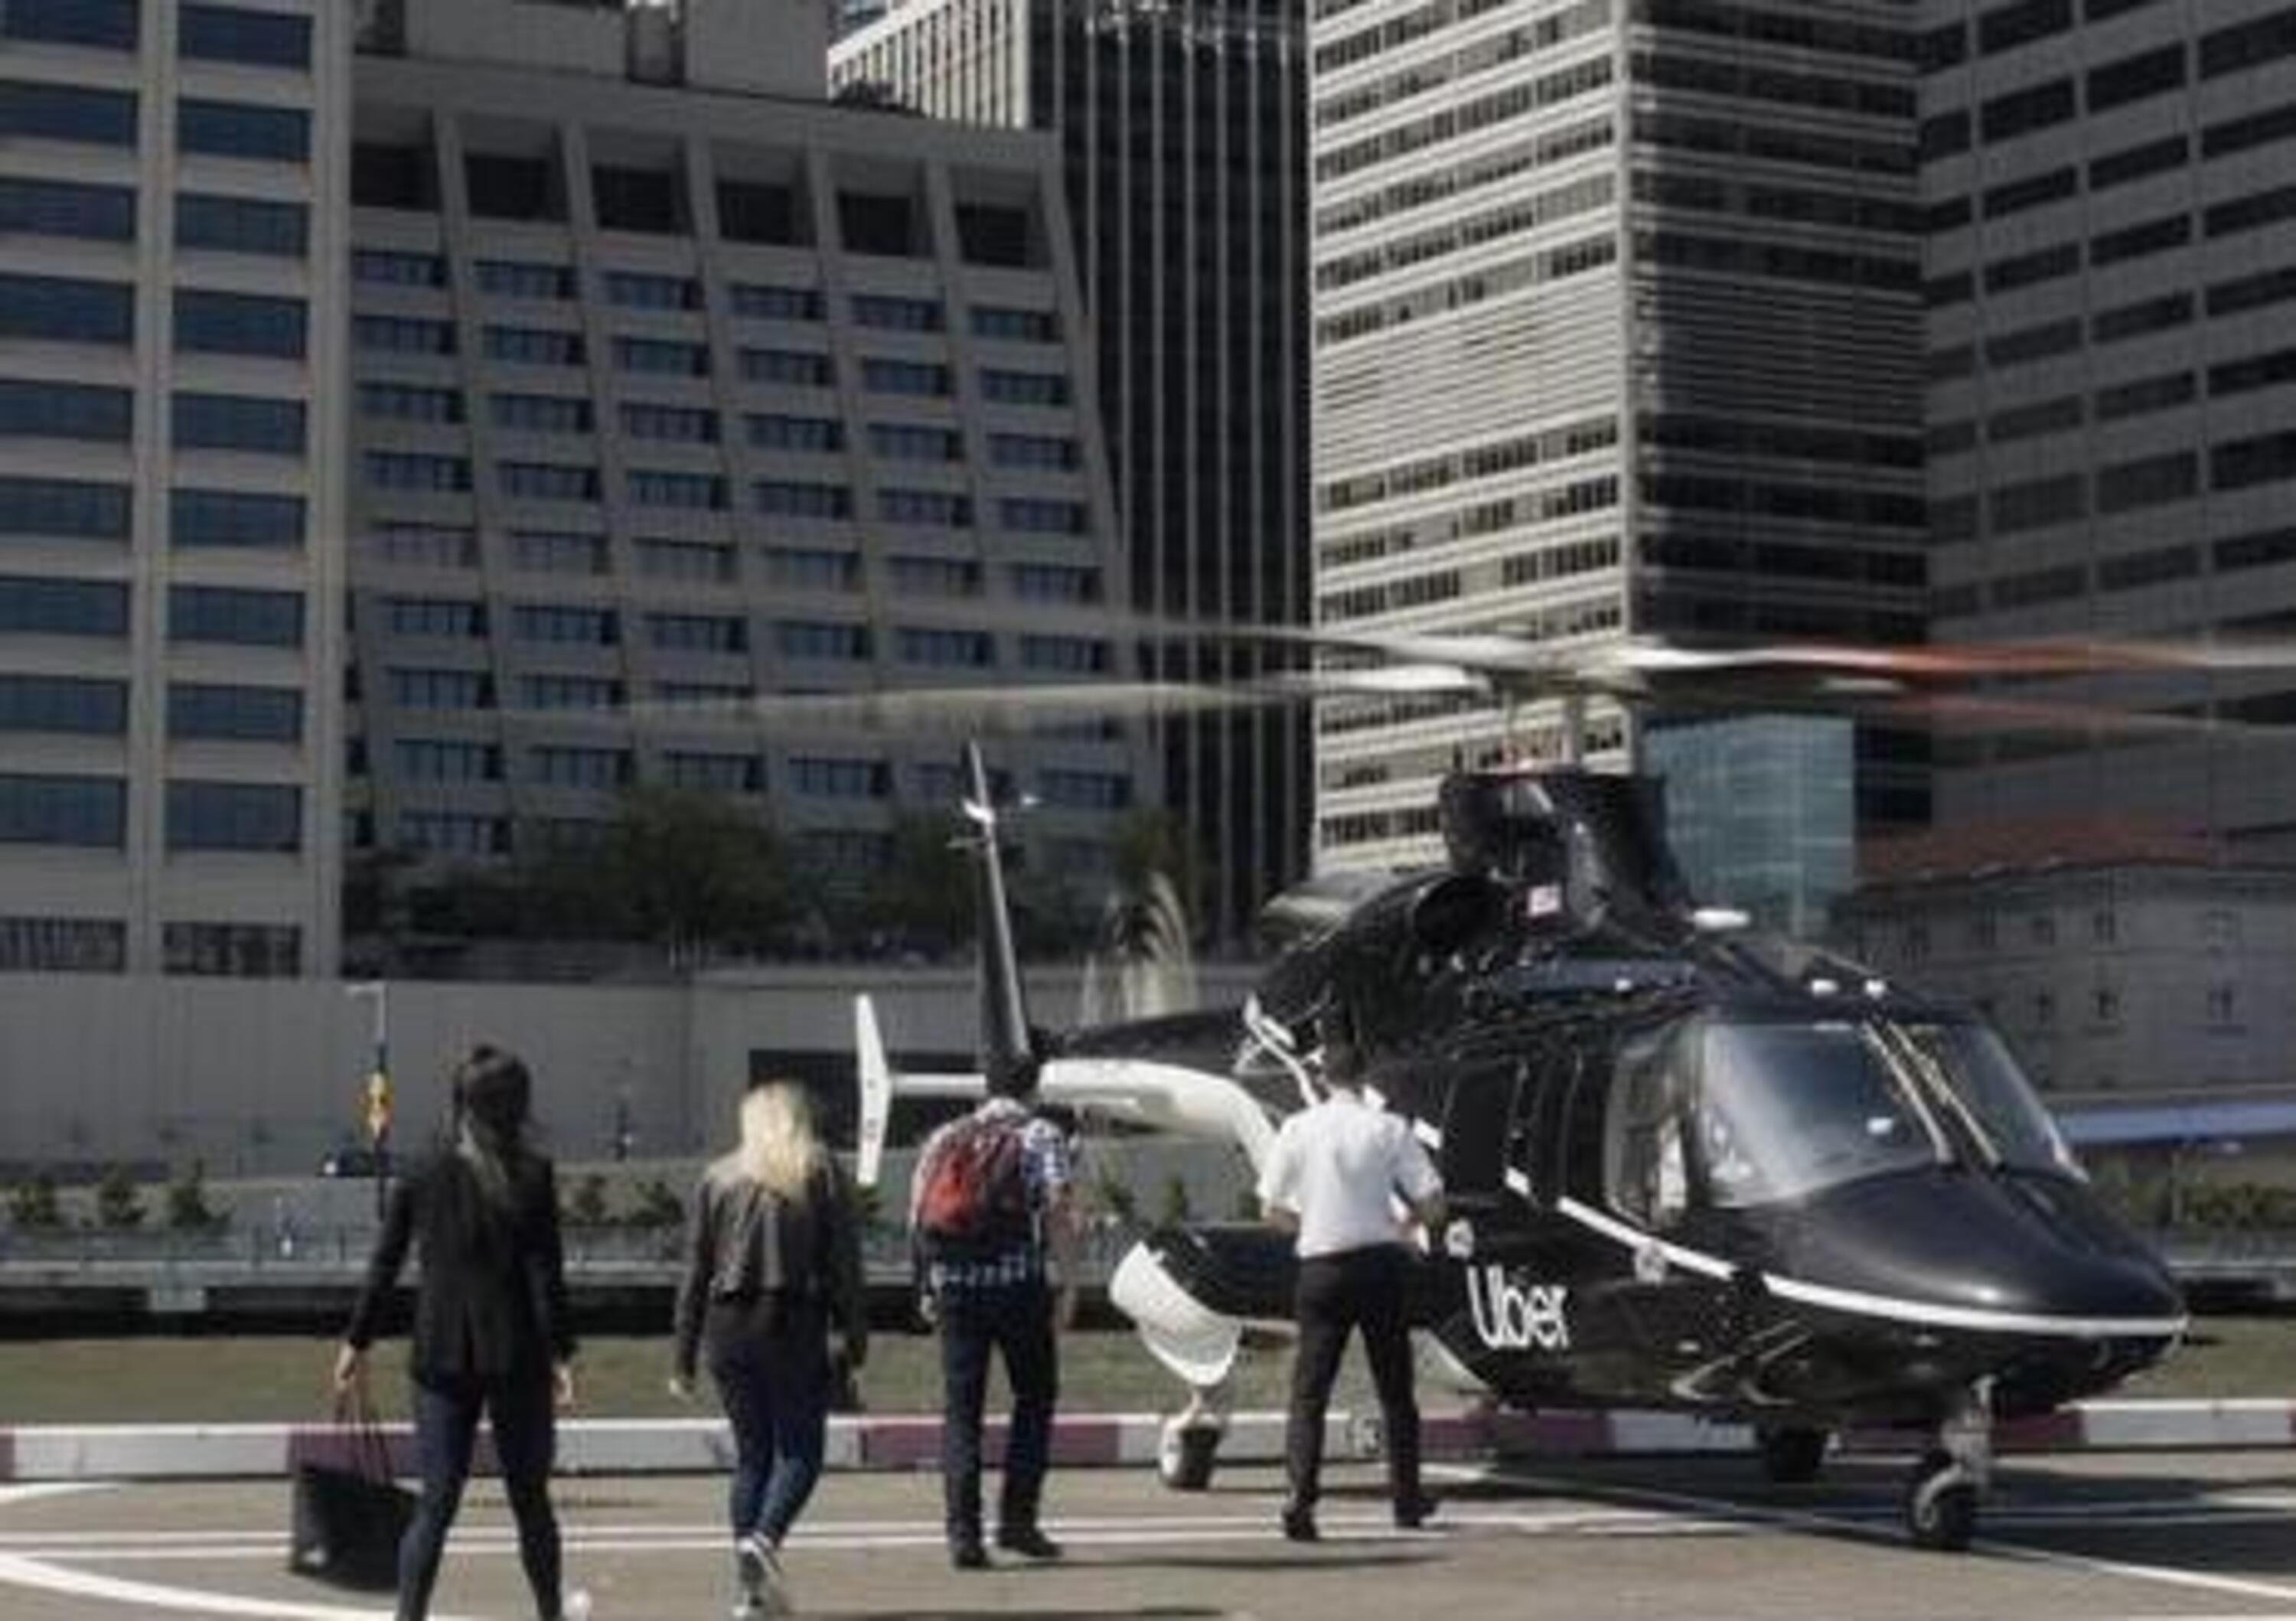 Uber, a New York arriva il taxi-elicottero